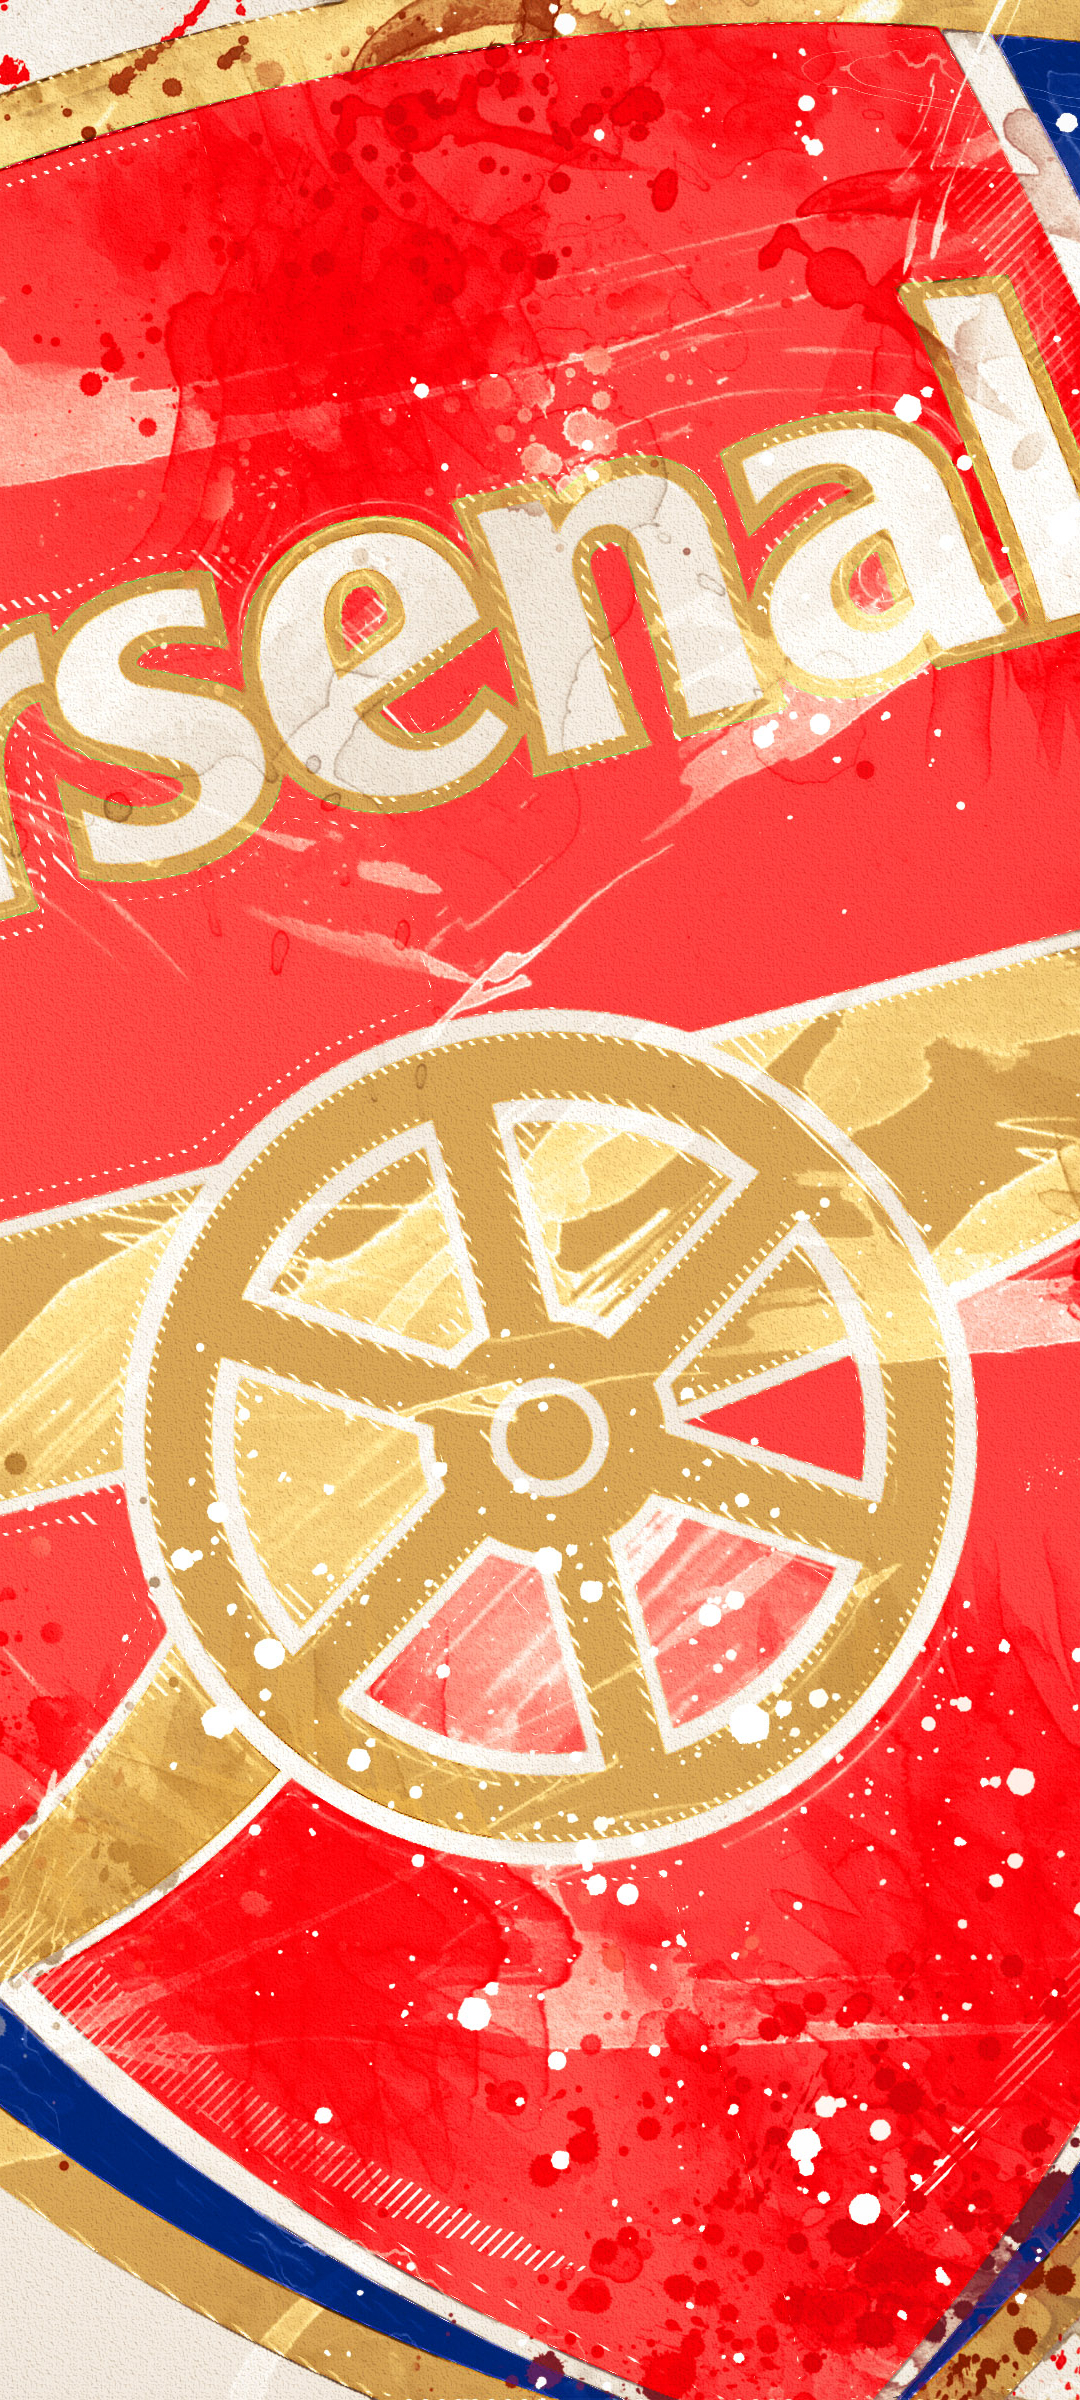 Arsenal FC wallpaper by ElnazTajaddod  Download on ZEDGE  90b9